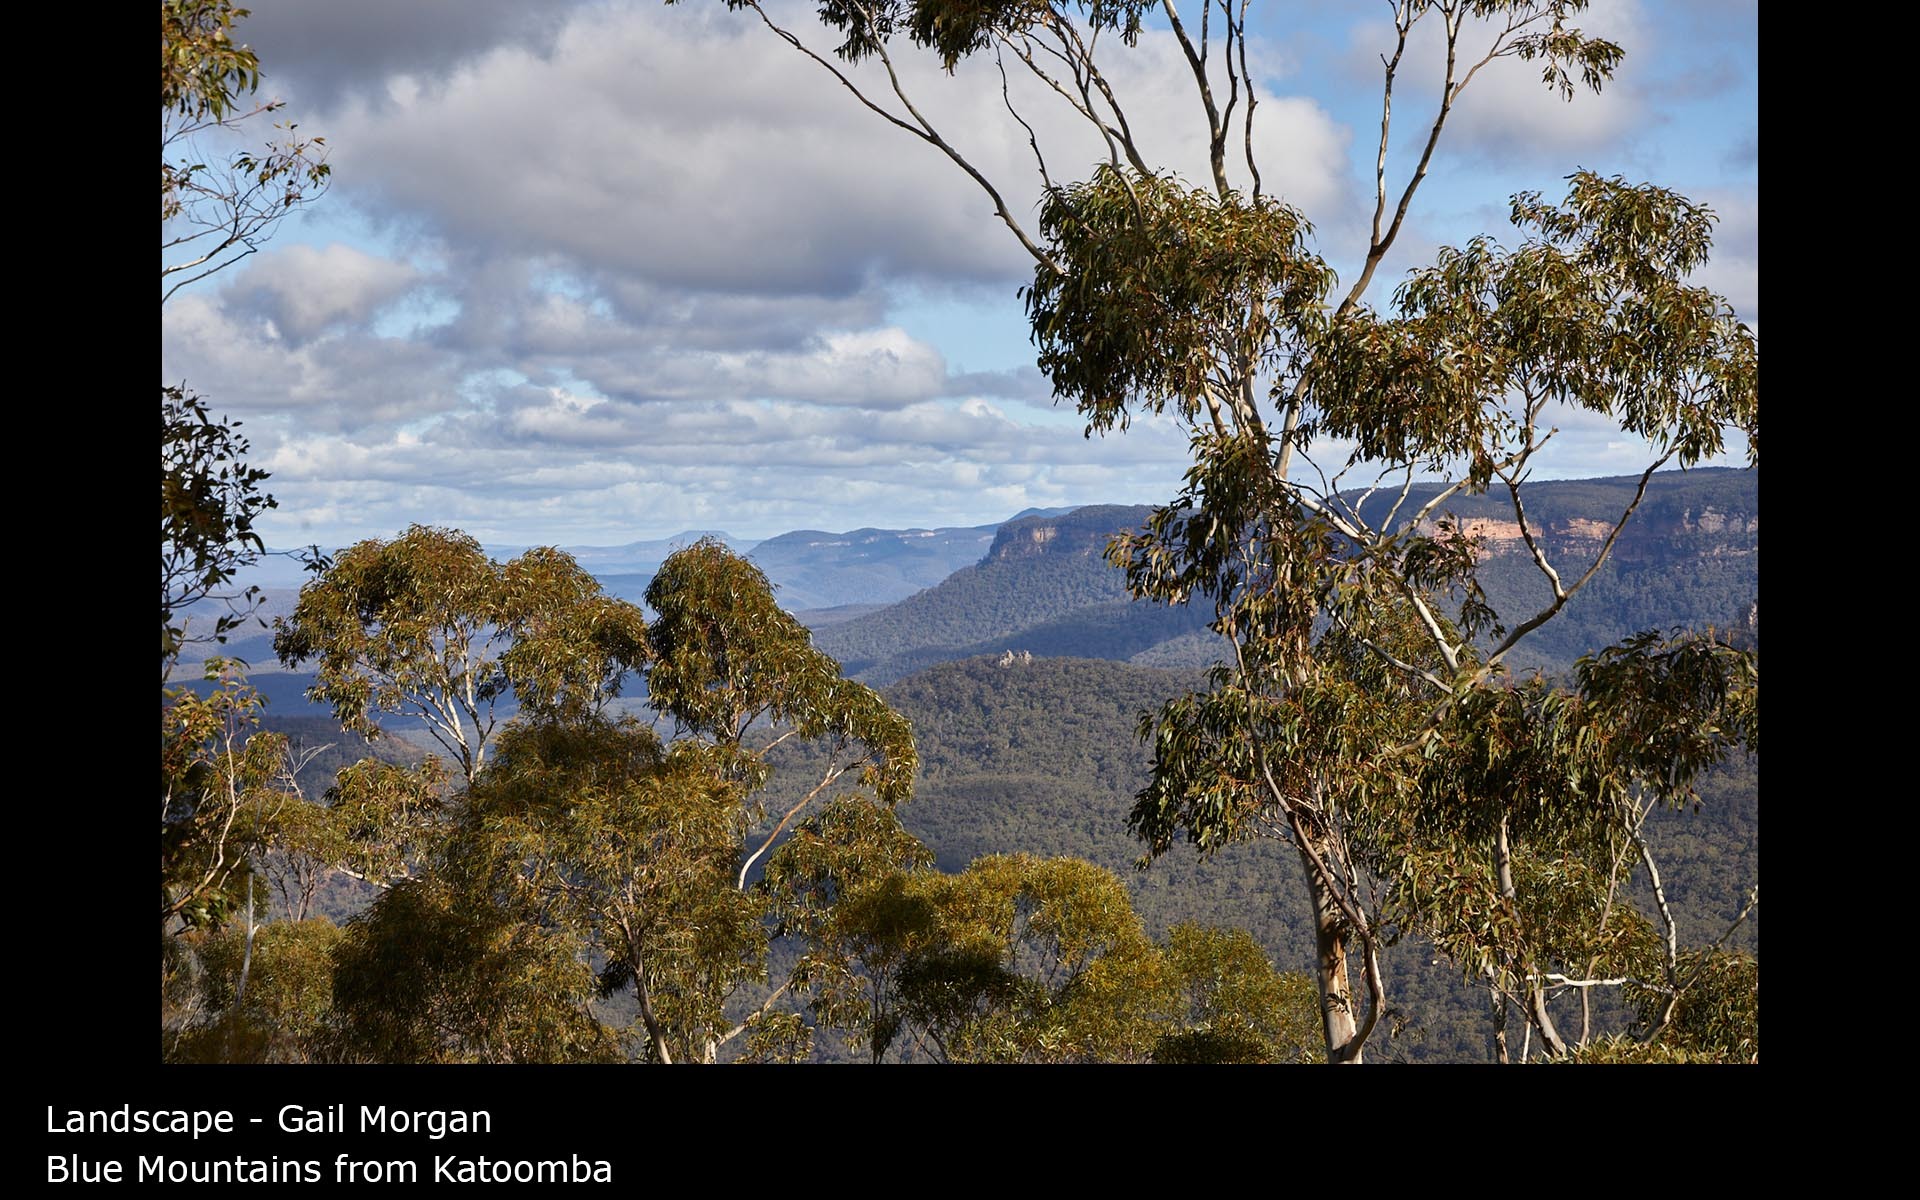 Blue Mountains from Katoomba - Gail Morgan